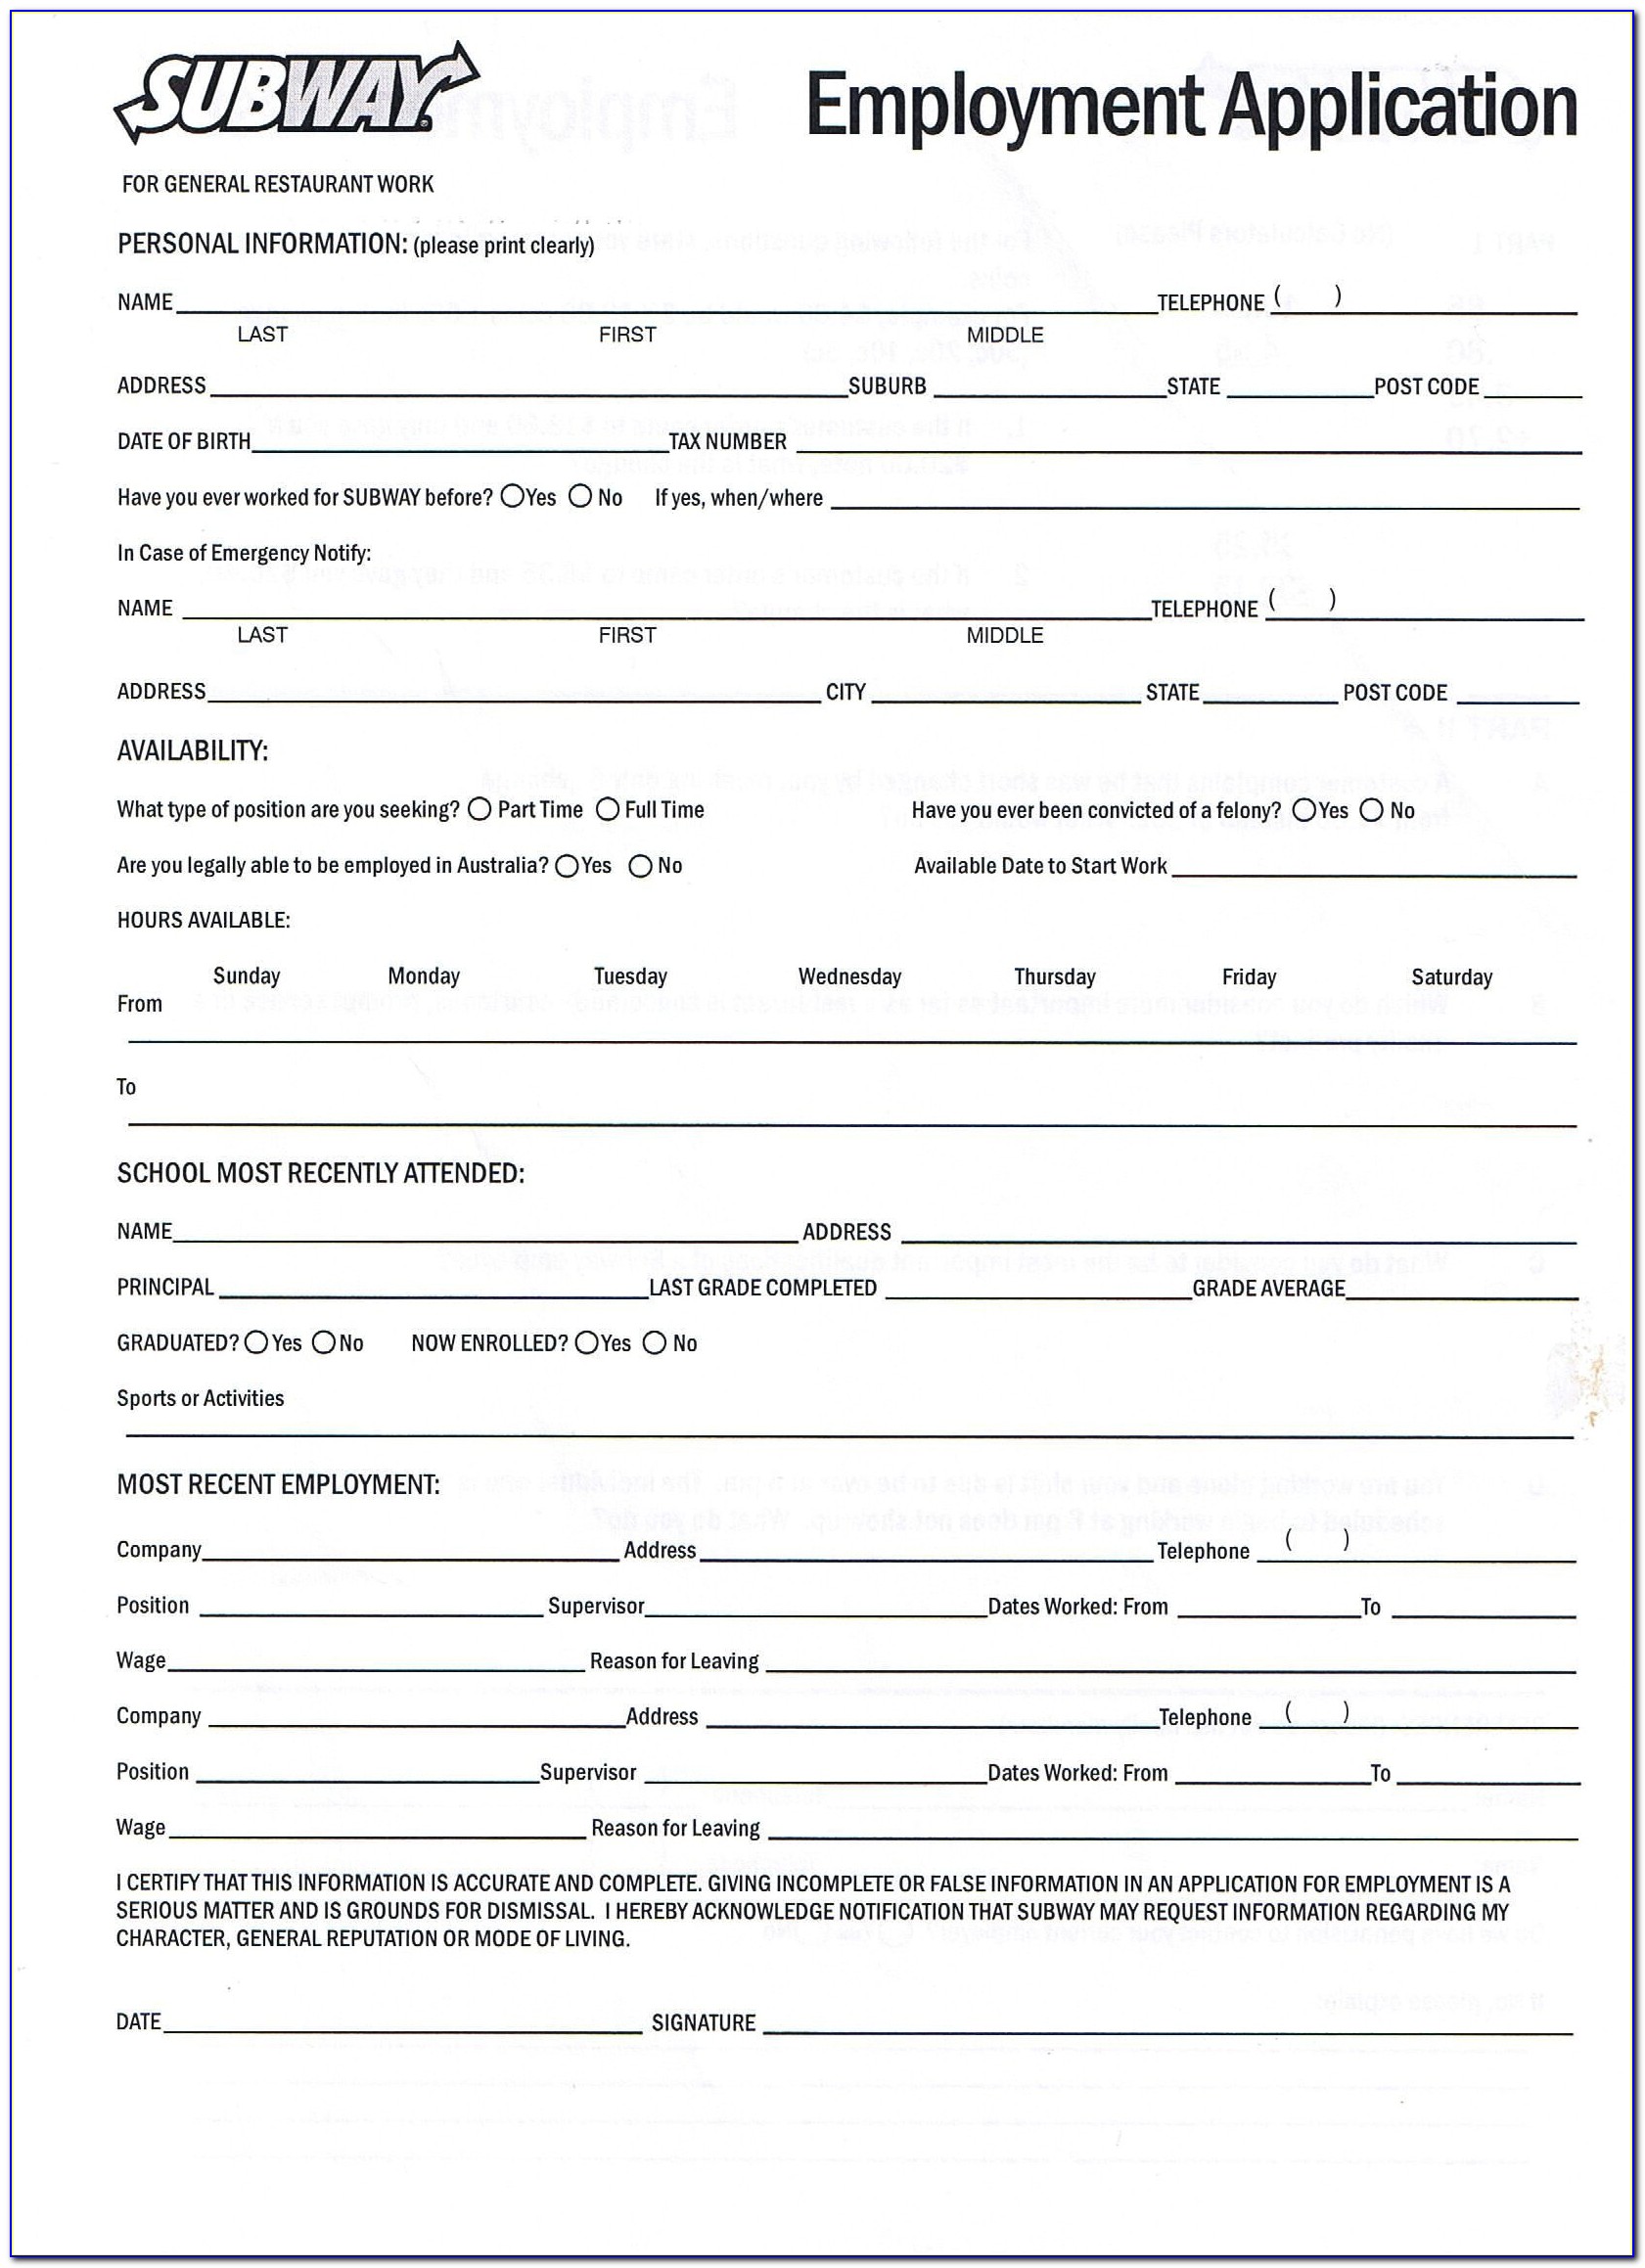 Blank Resume Form For Job Application